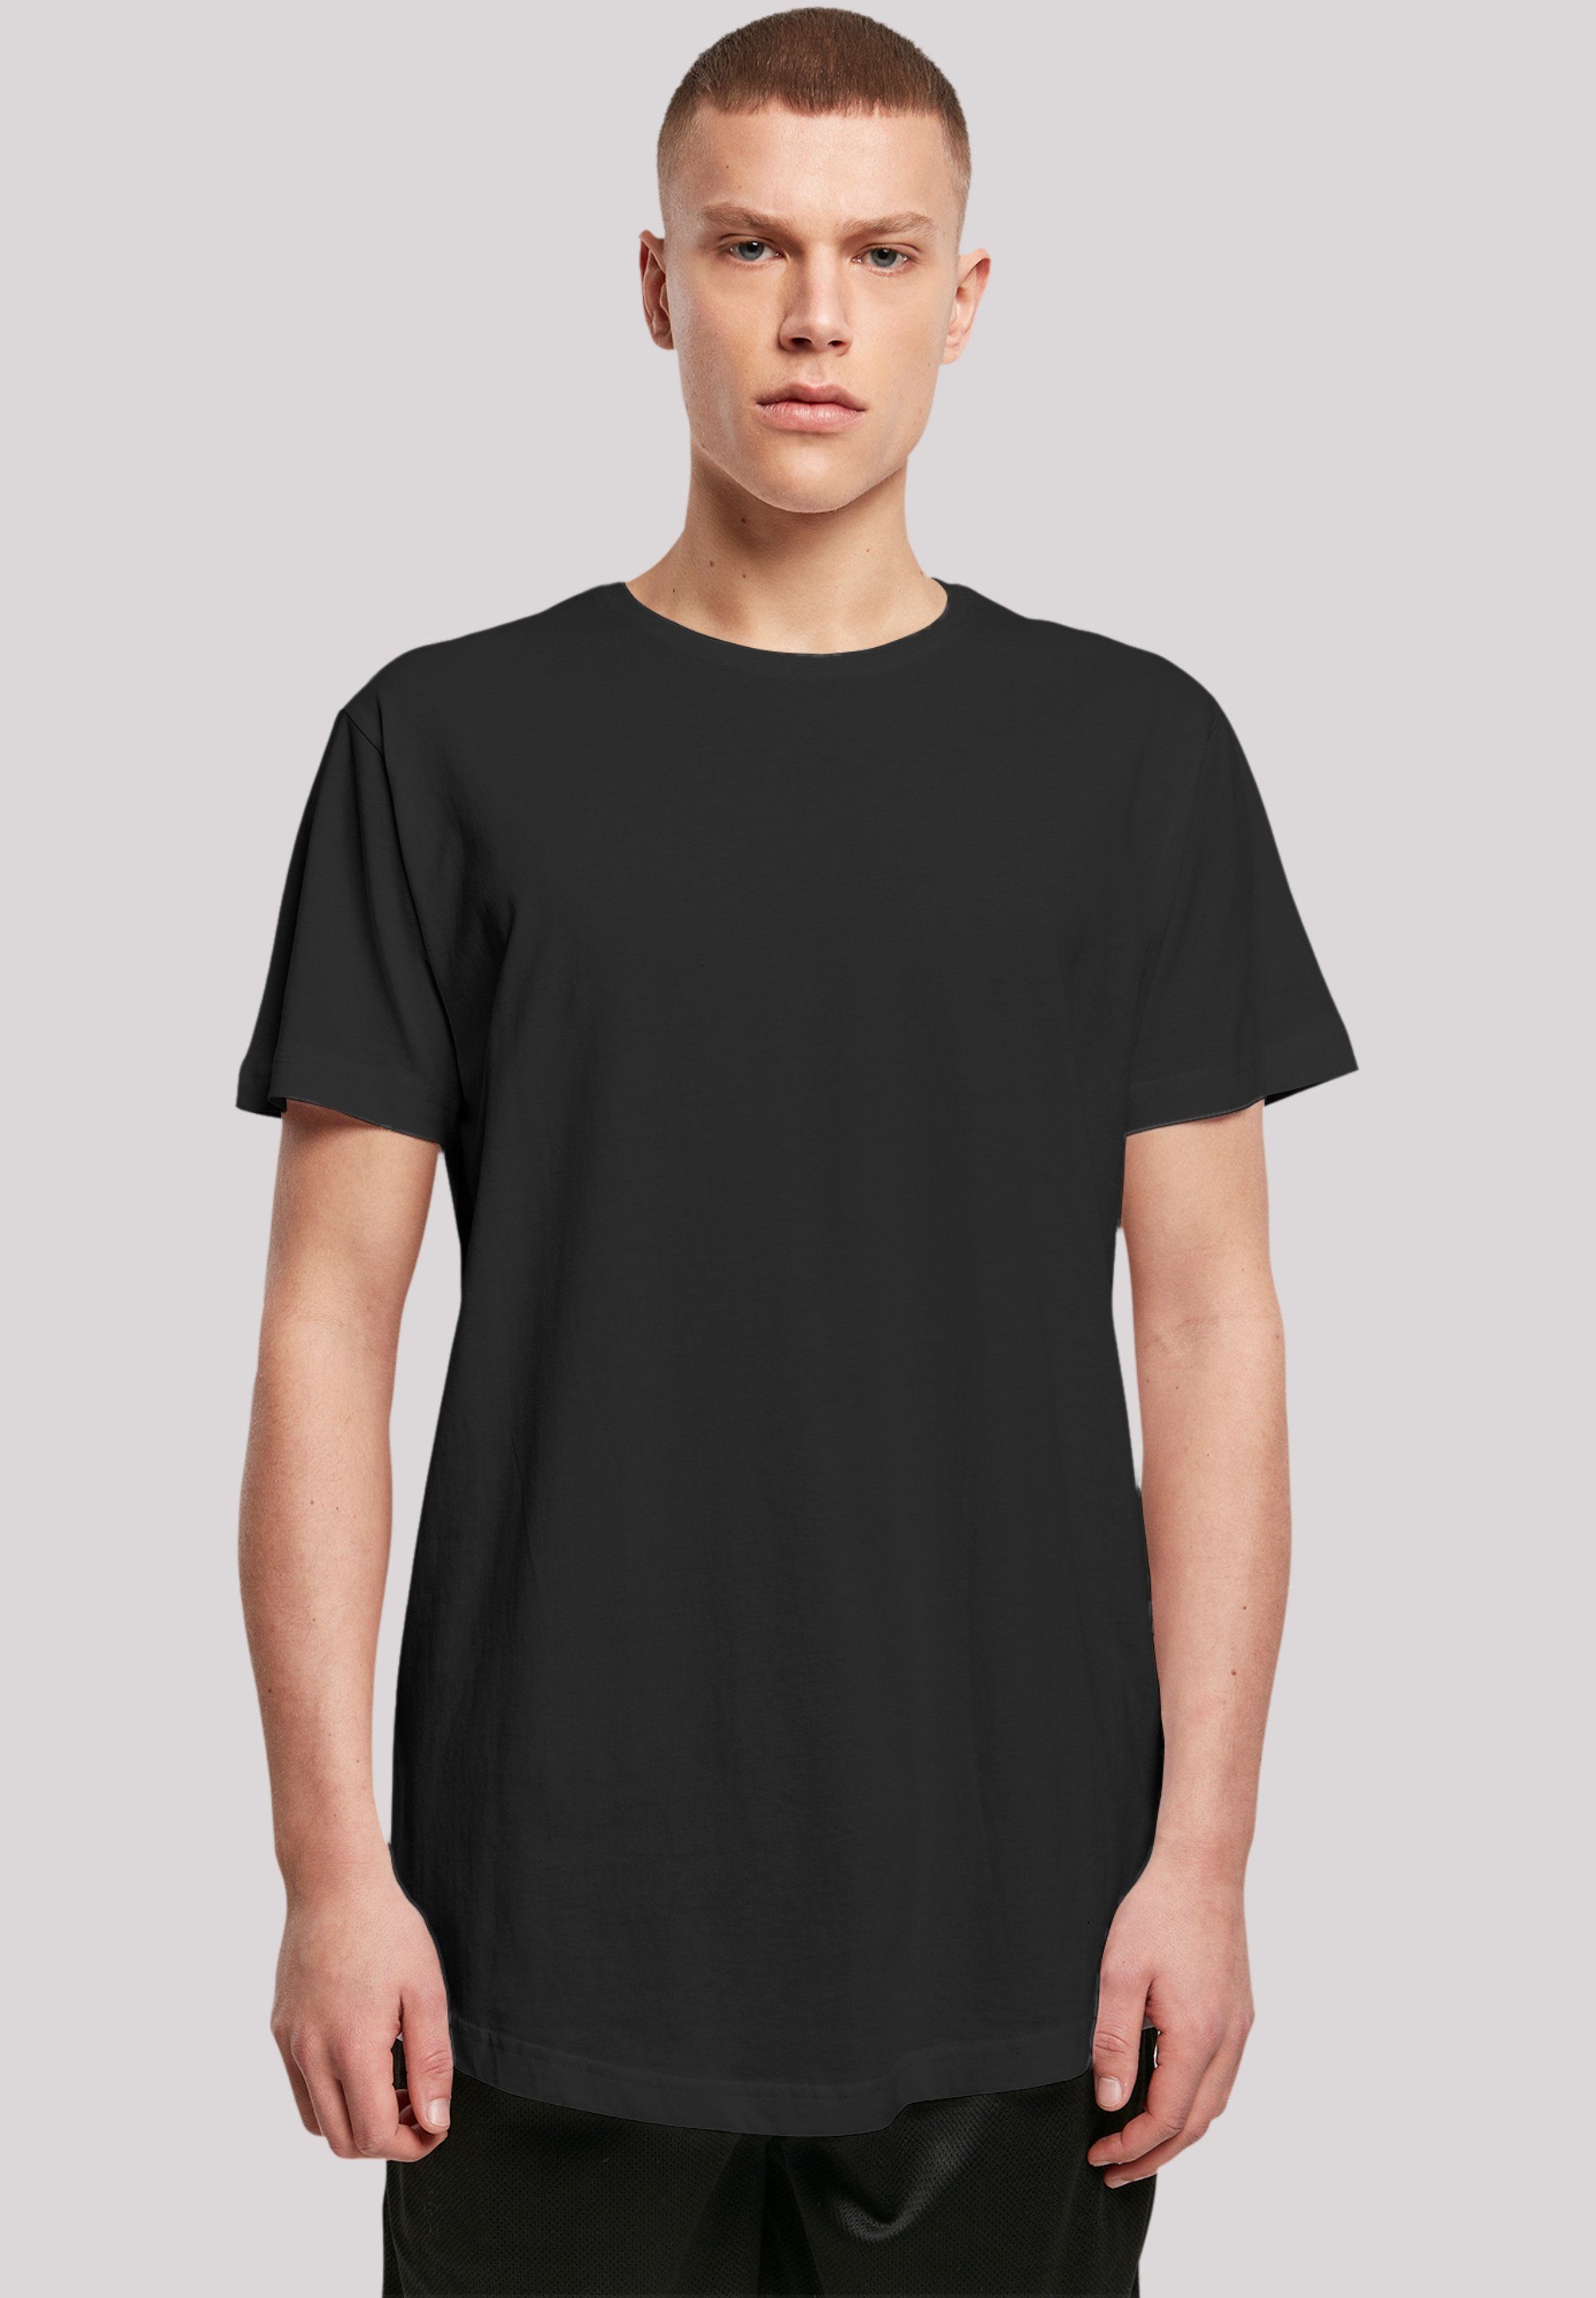 Welle schwarz Japan Print Kanagawa T-Shirt F4NT4STIC